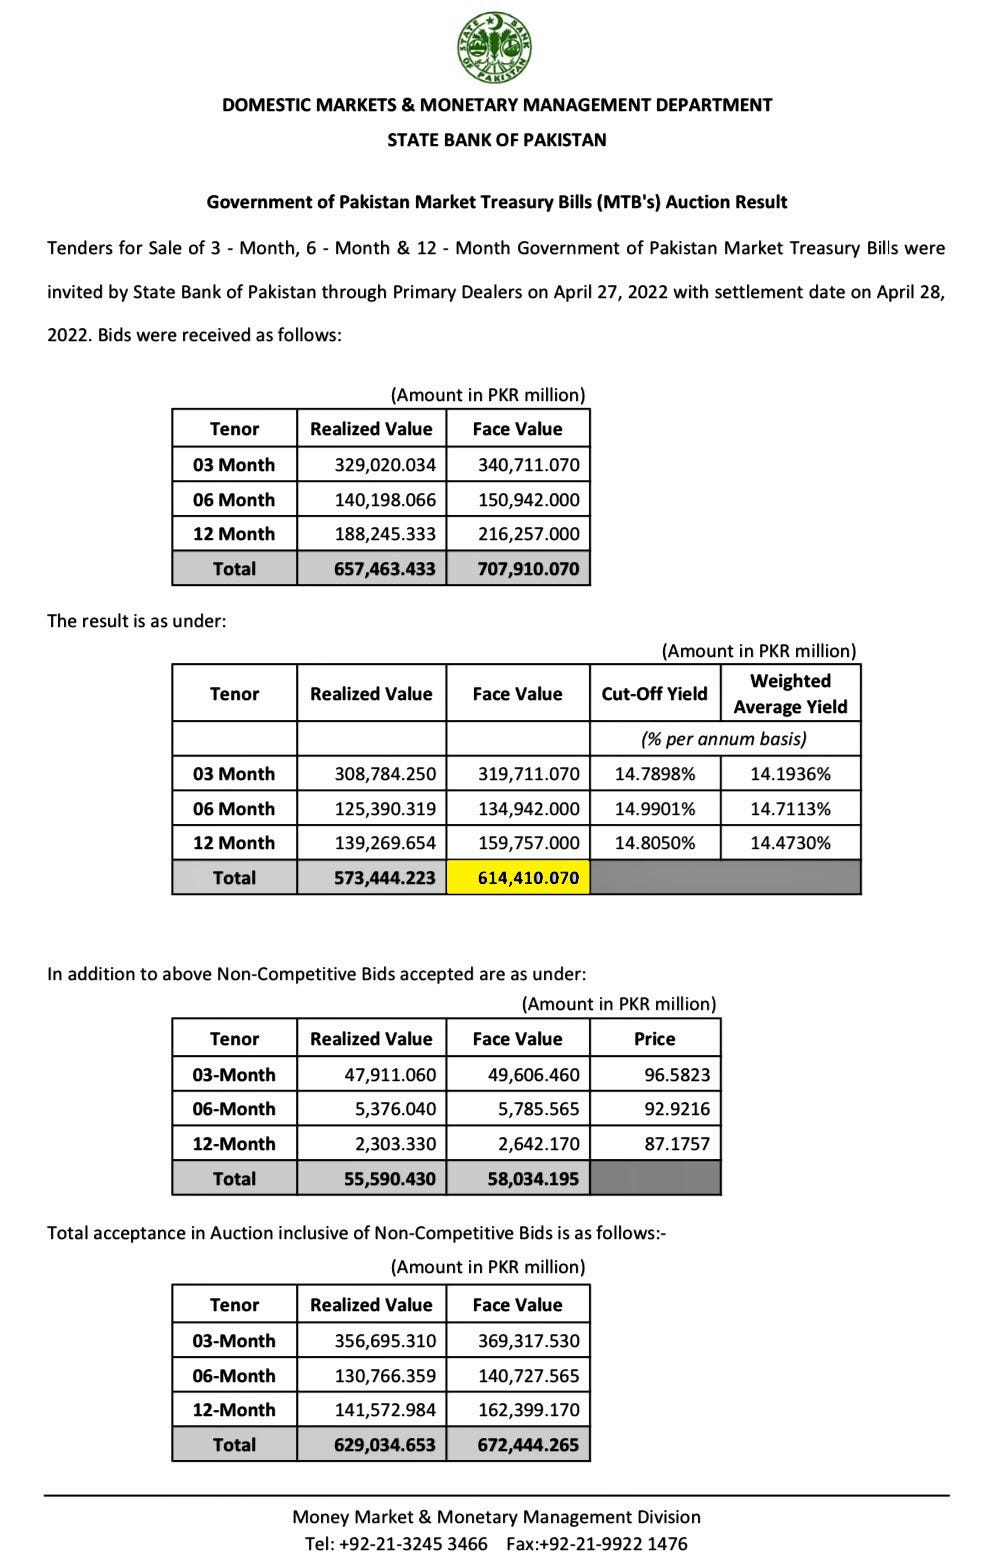 Market Treasury Bills (T-Bills) auction result - State Bank of Pakistan